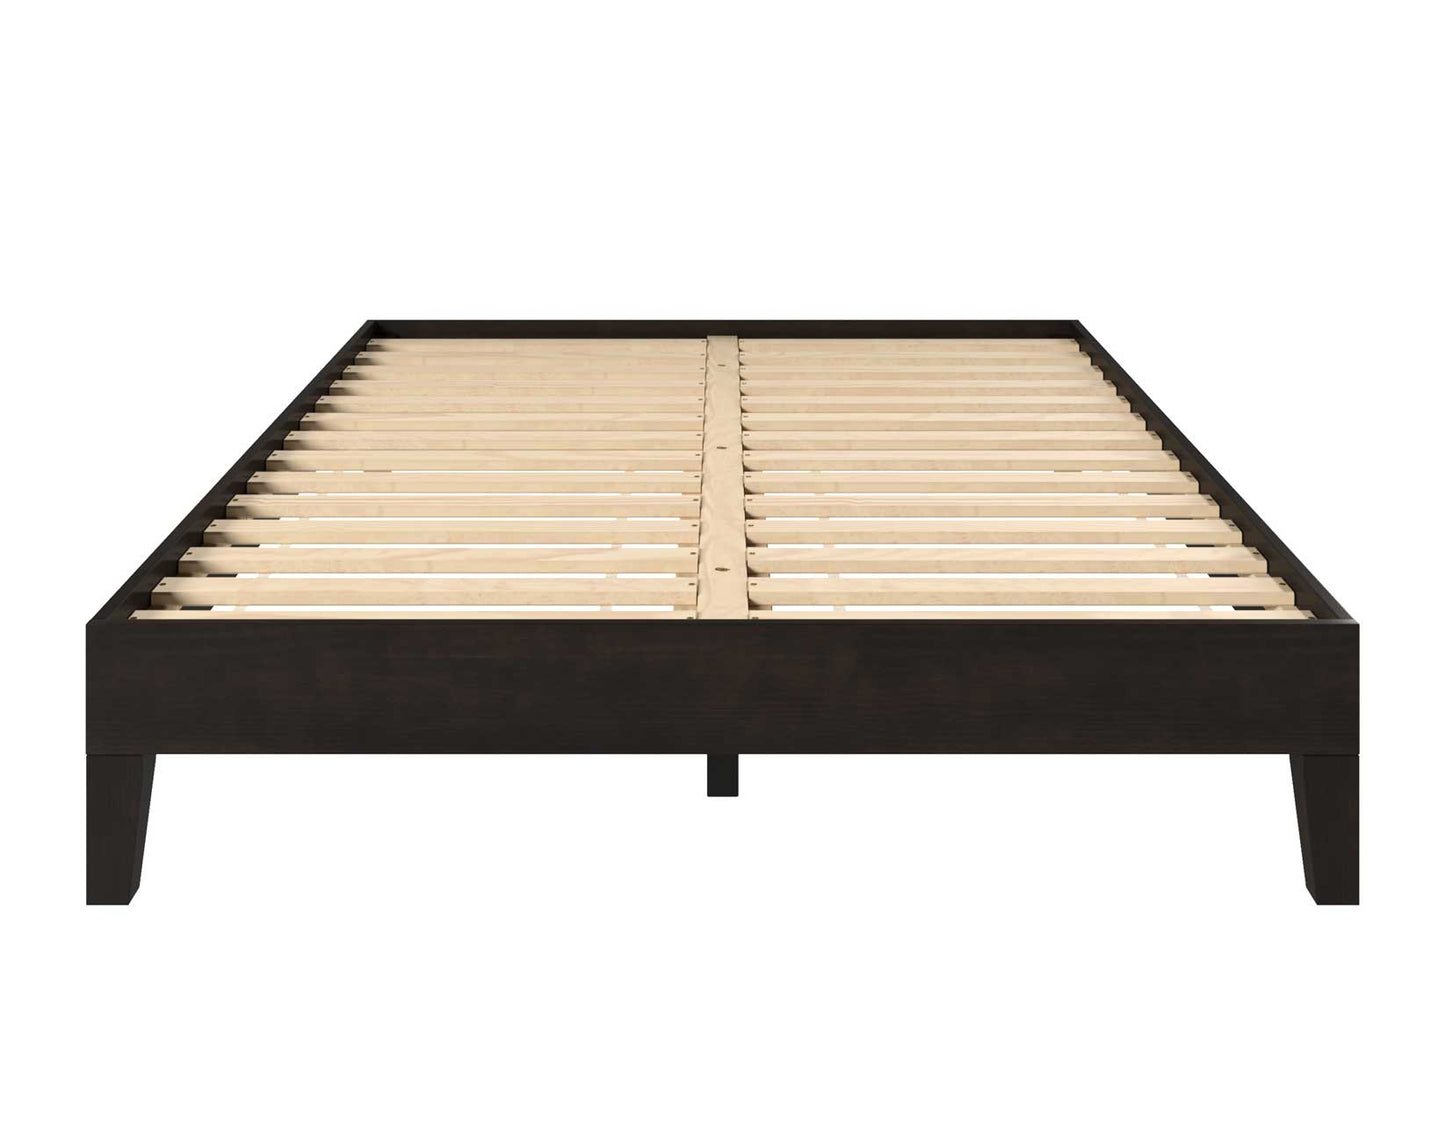 Nix Full Platform Bed, Black